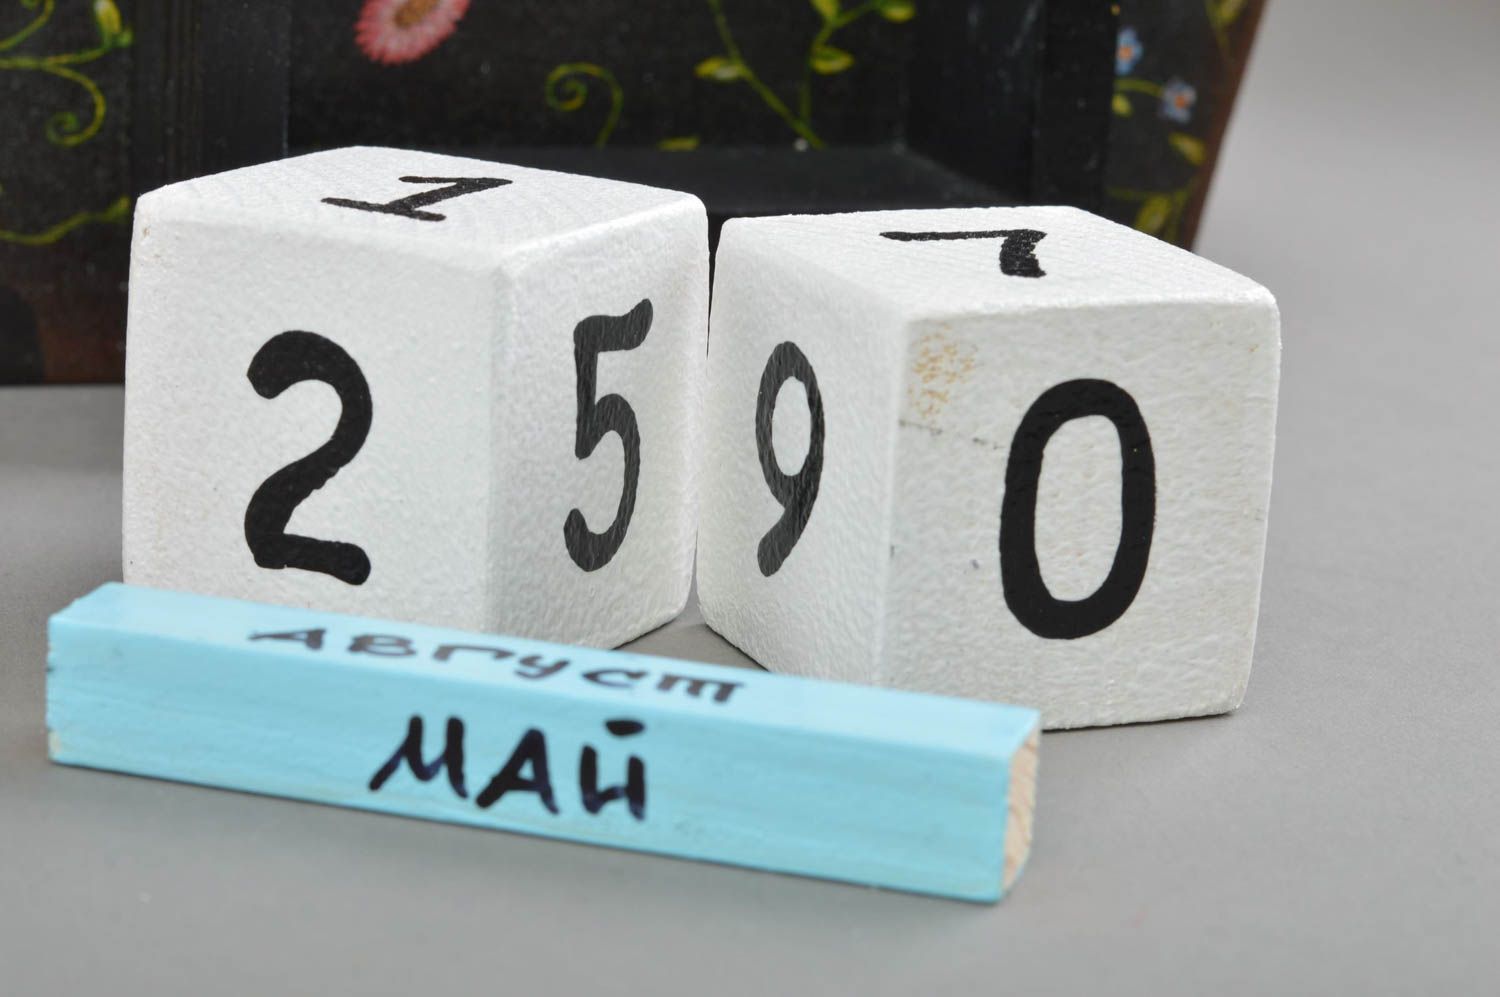 Календарь из кубиков. Календарь кубики. Настольный календарь кубики с цифрами. Кубики для календаря раскладка.